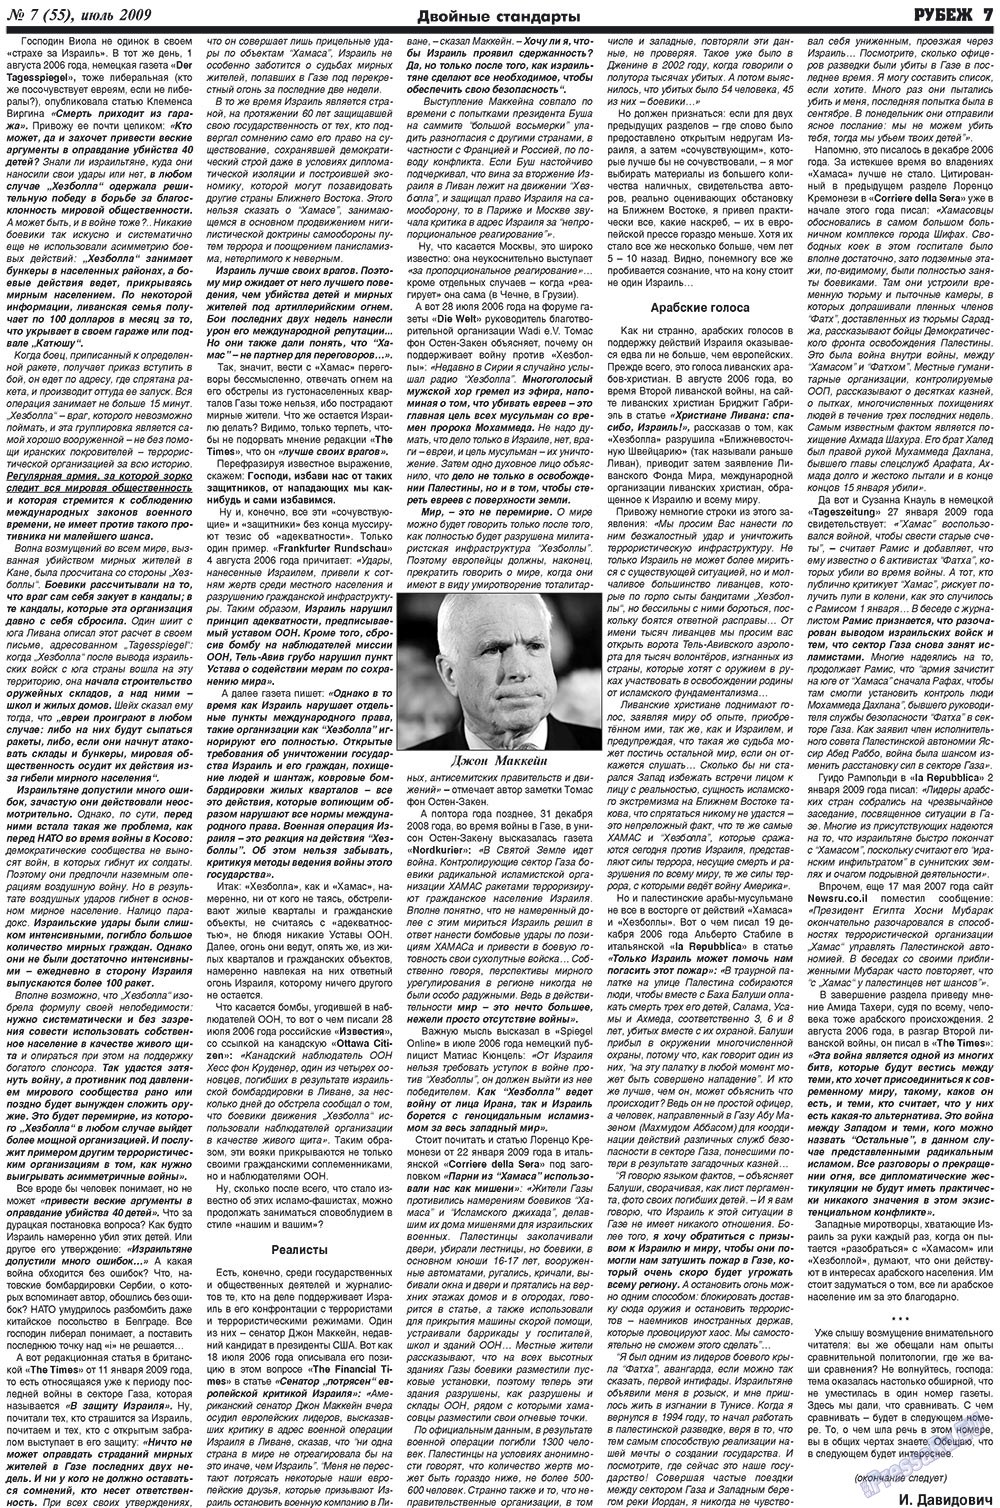 Рубеж, газета. 2009 №7 стр.7